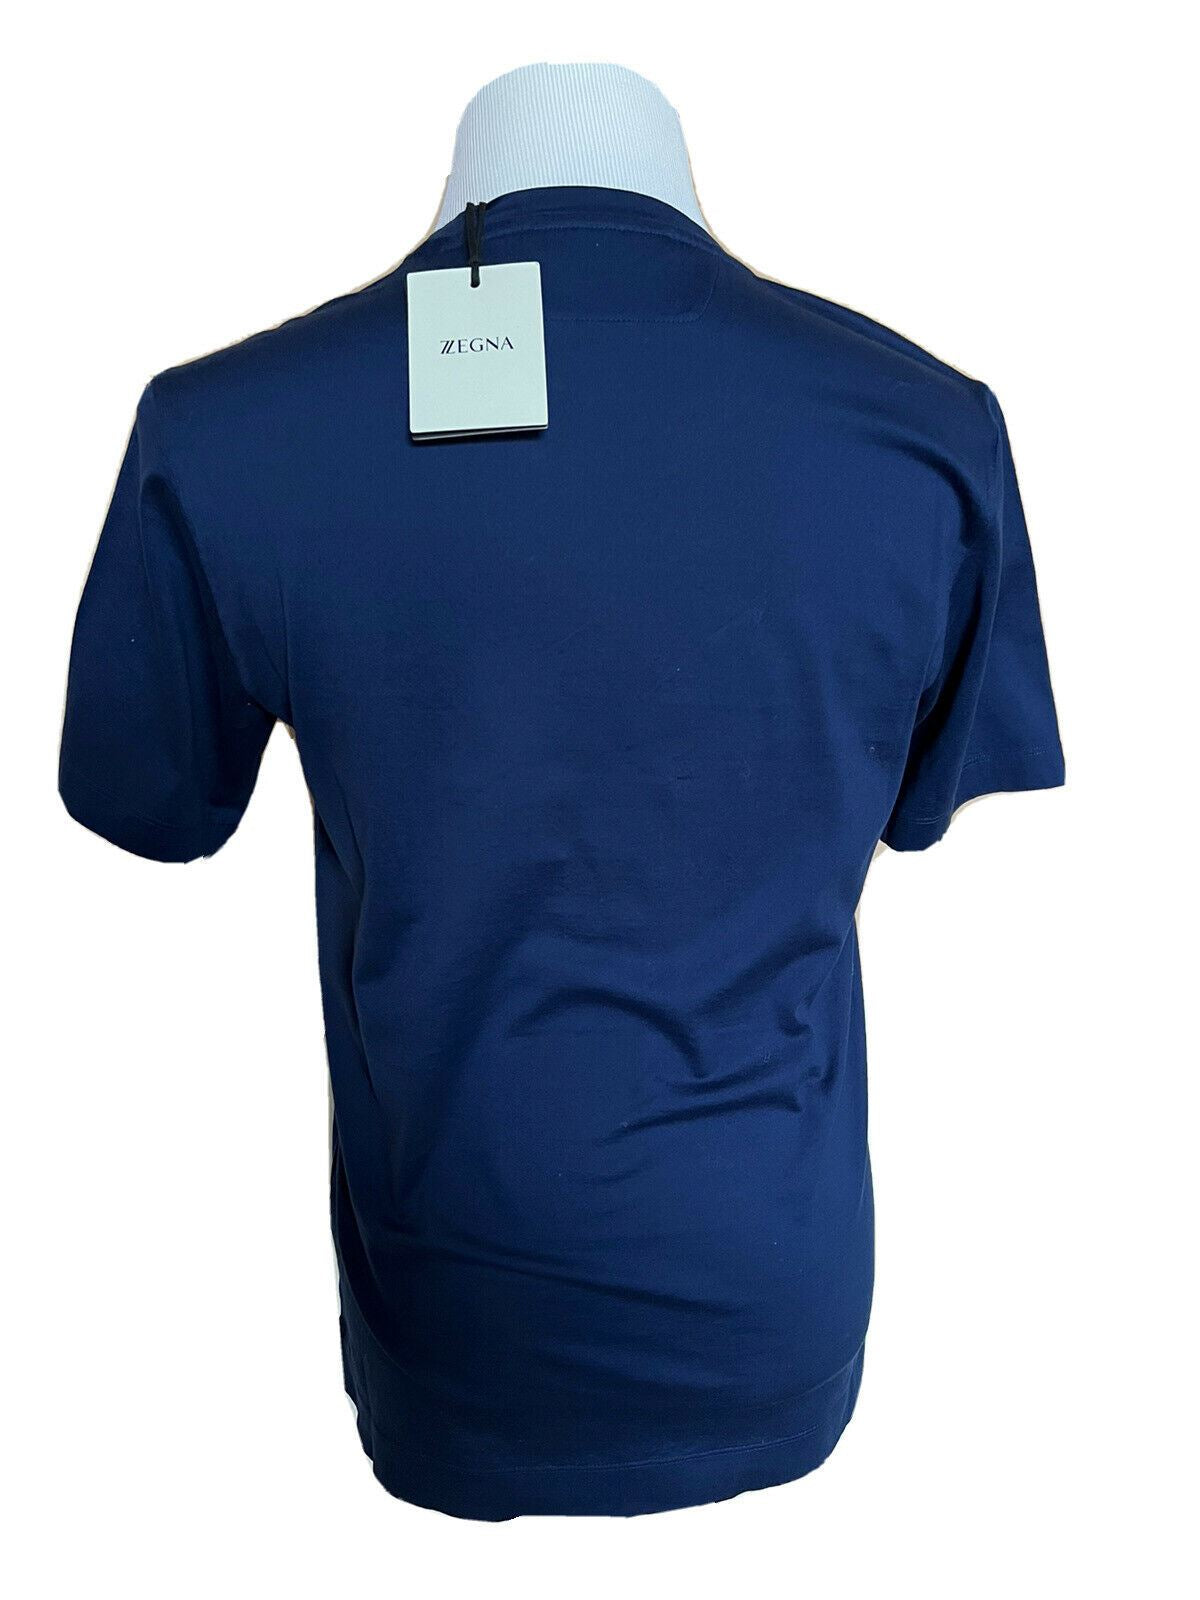 СЗТ $325 ZZEGNA Синяя футболка с круглым вырезом XL ZZF630